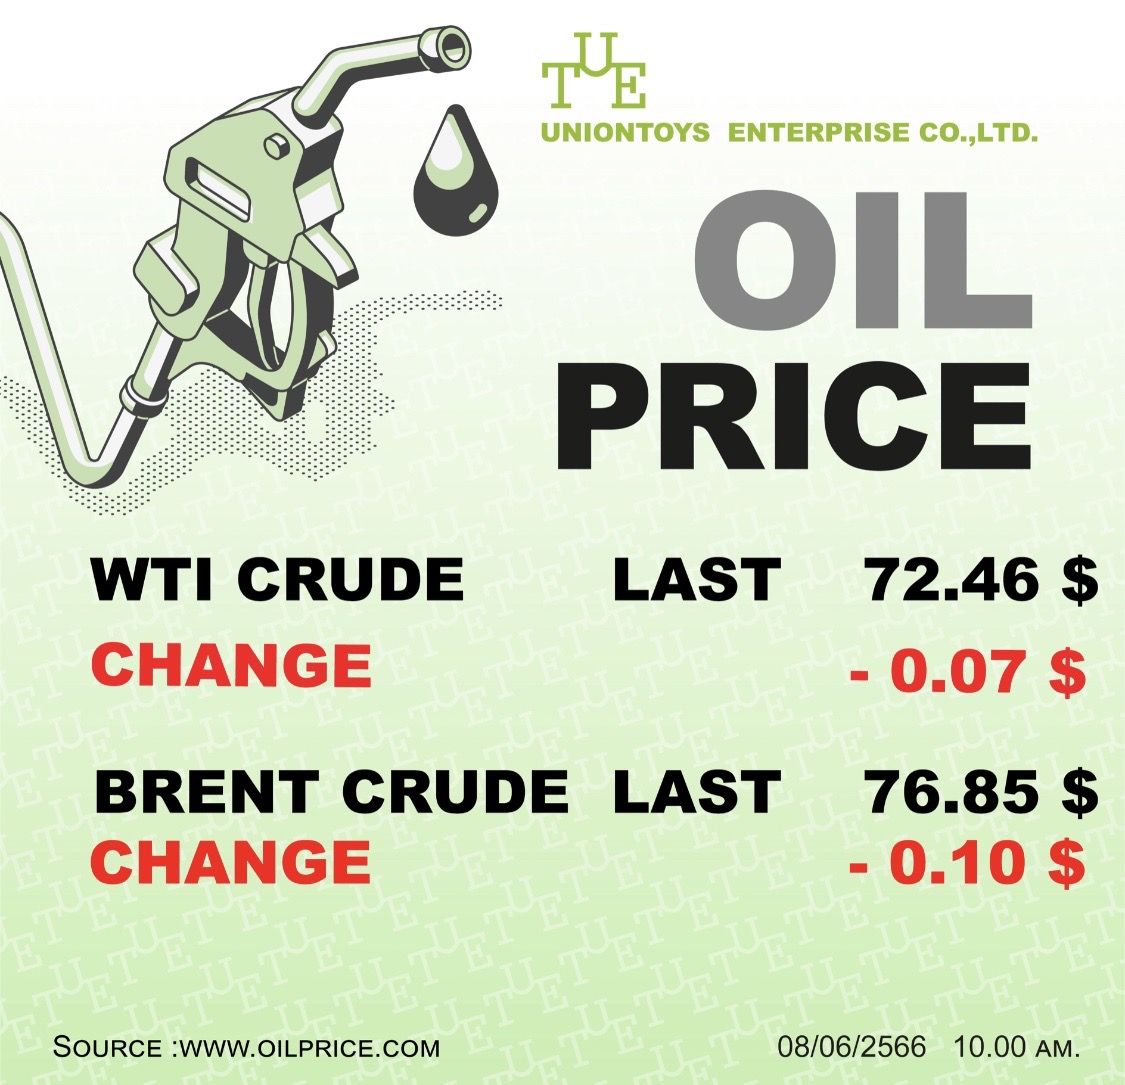 Uniontoys Oil Price Update - 08-06-2023